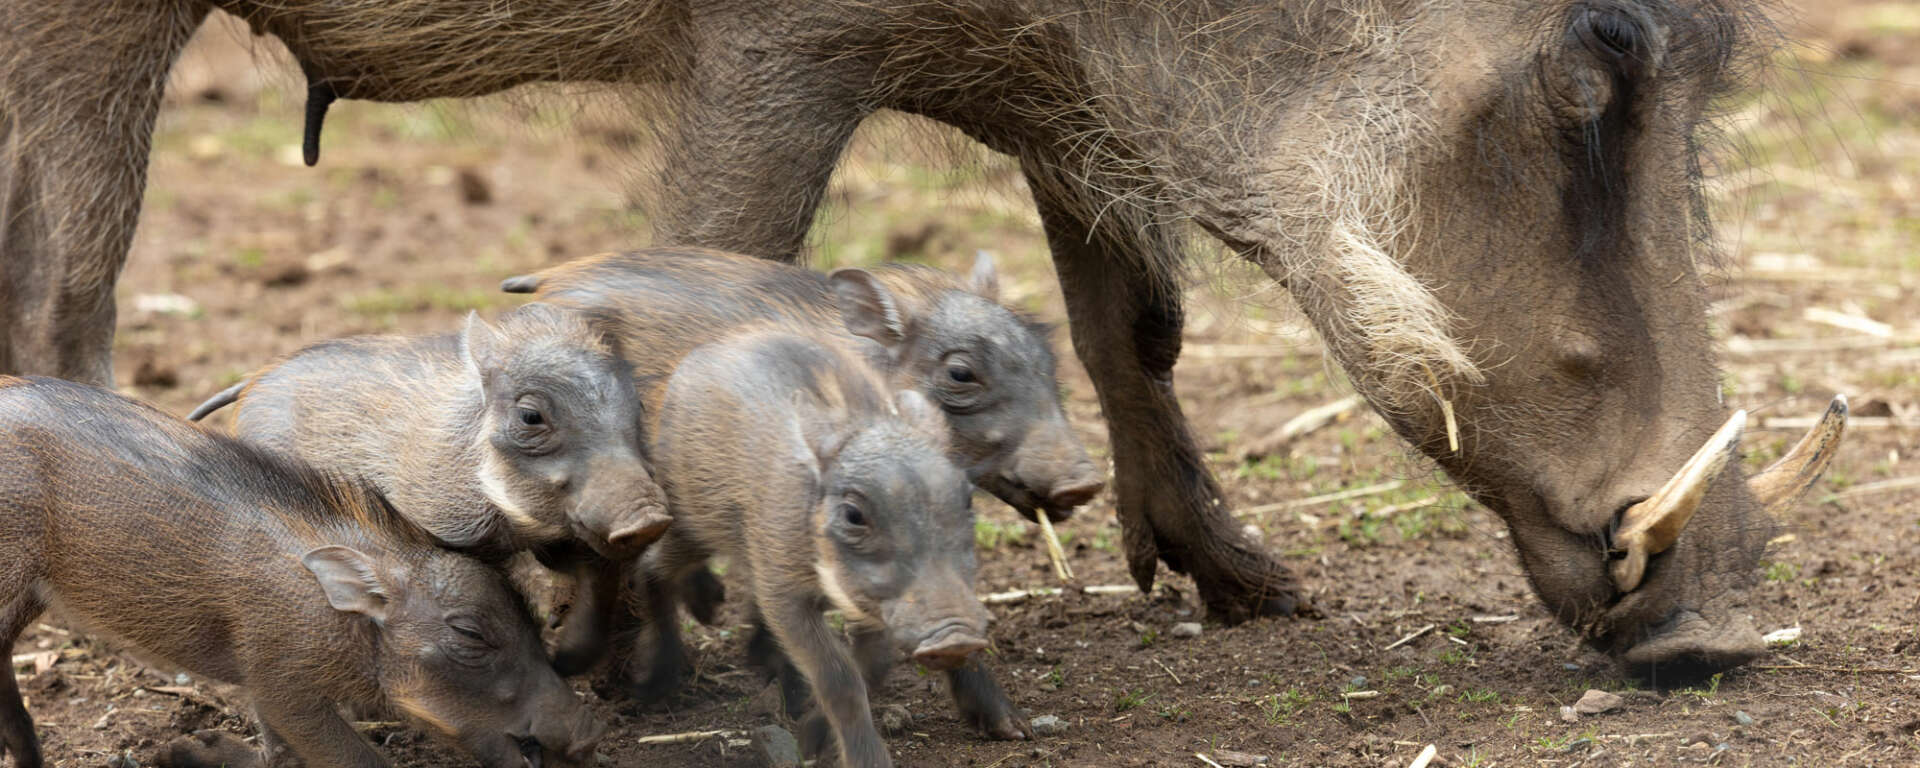 Warthog piglets photo by Mark Pressler